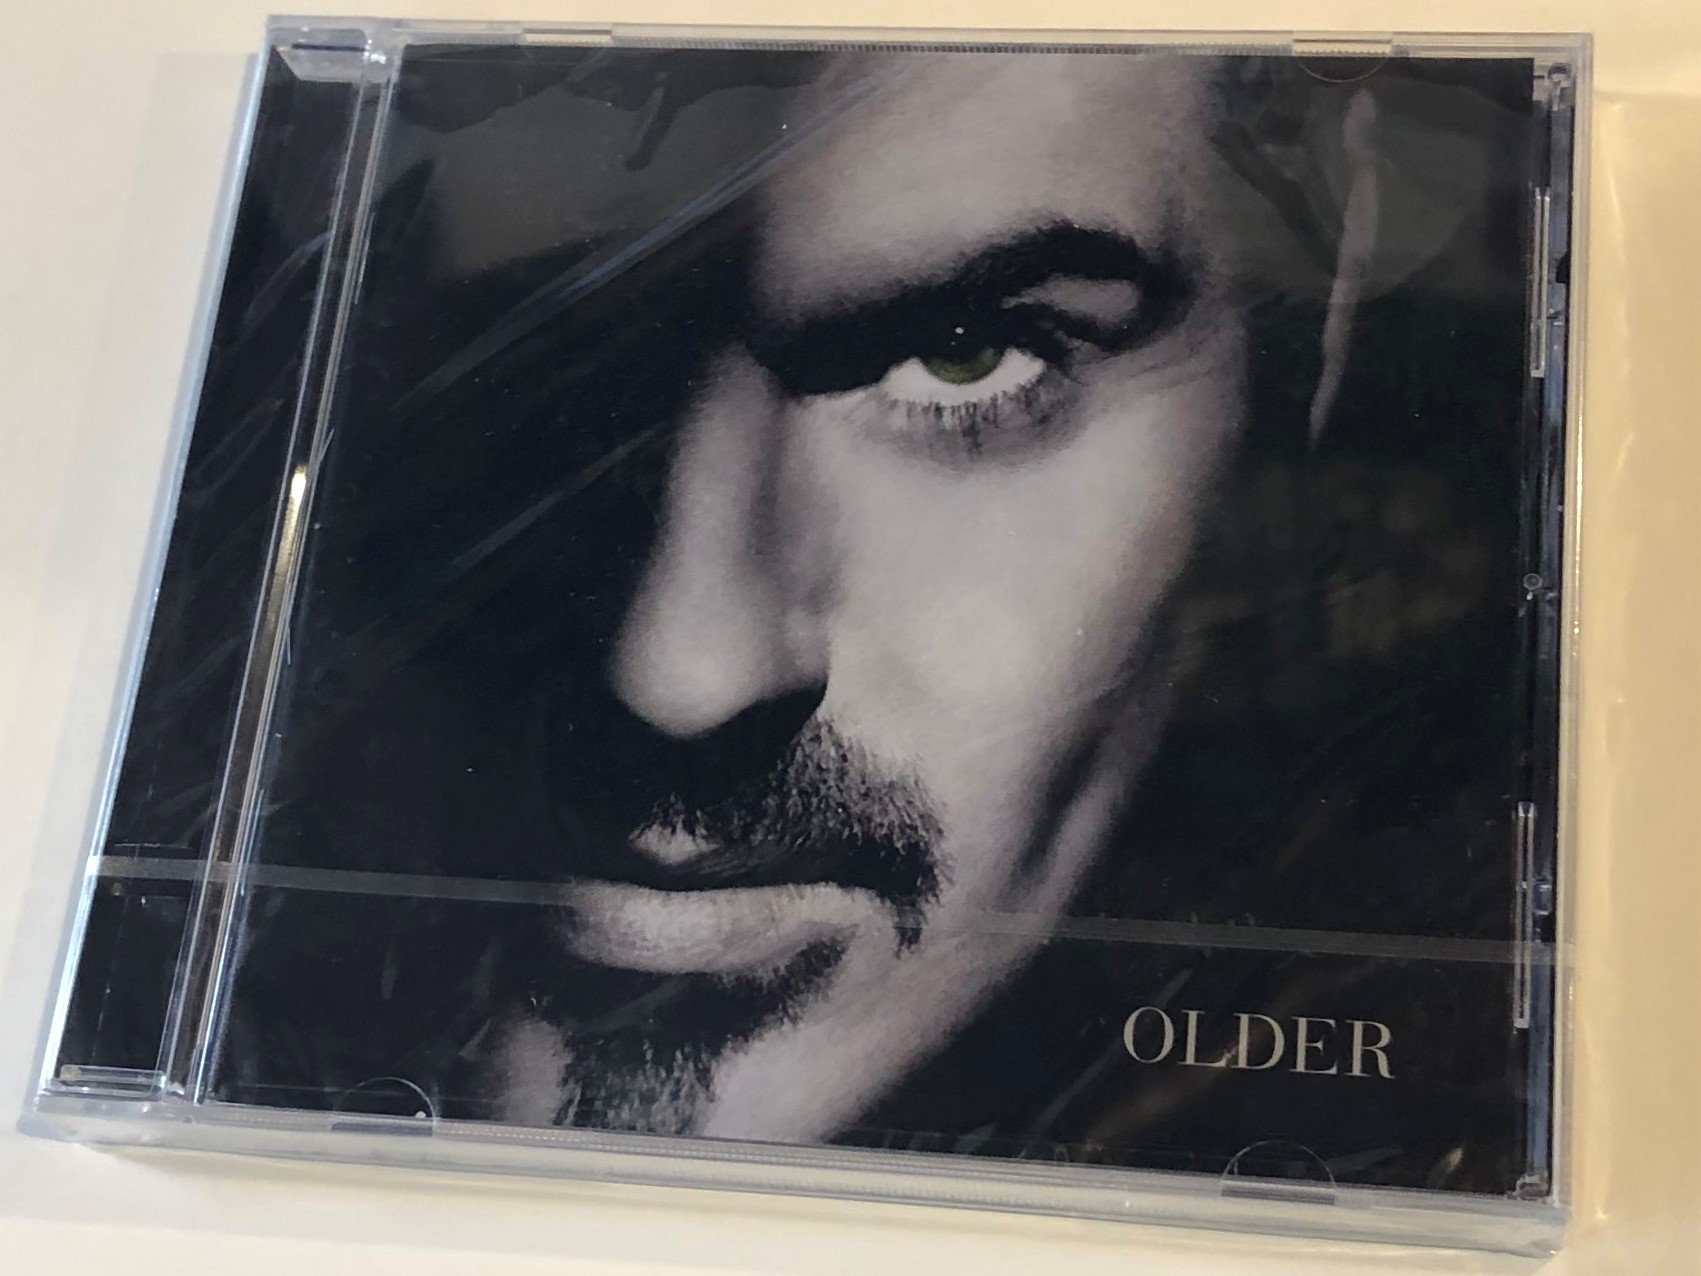 older-george-michael-sony-music-audio-cd-2011-88697840312-1-.jpg